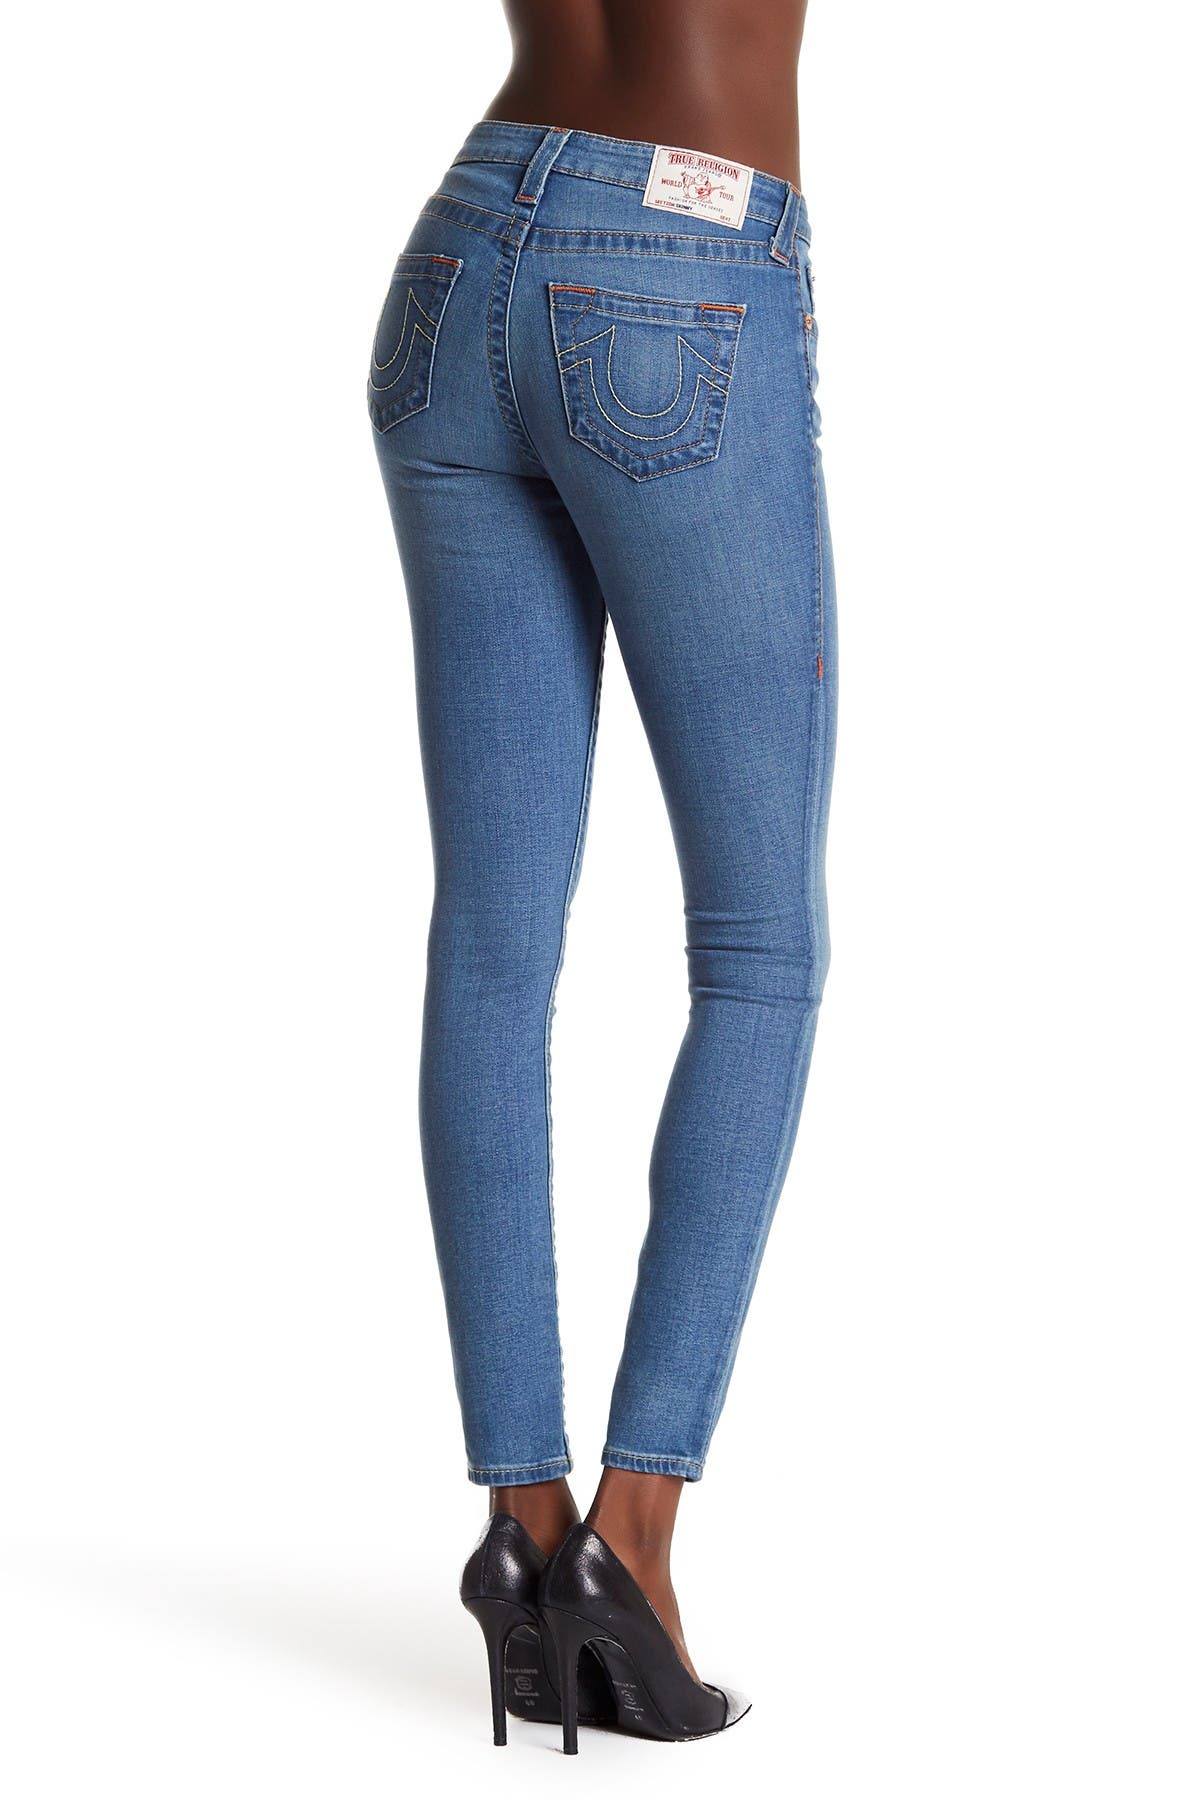 true religion curvy skinny jeans review